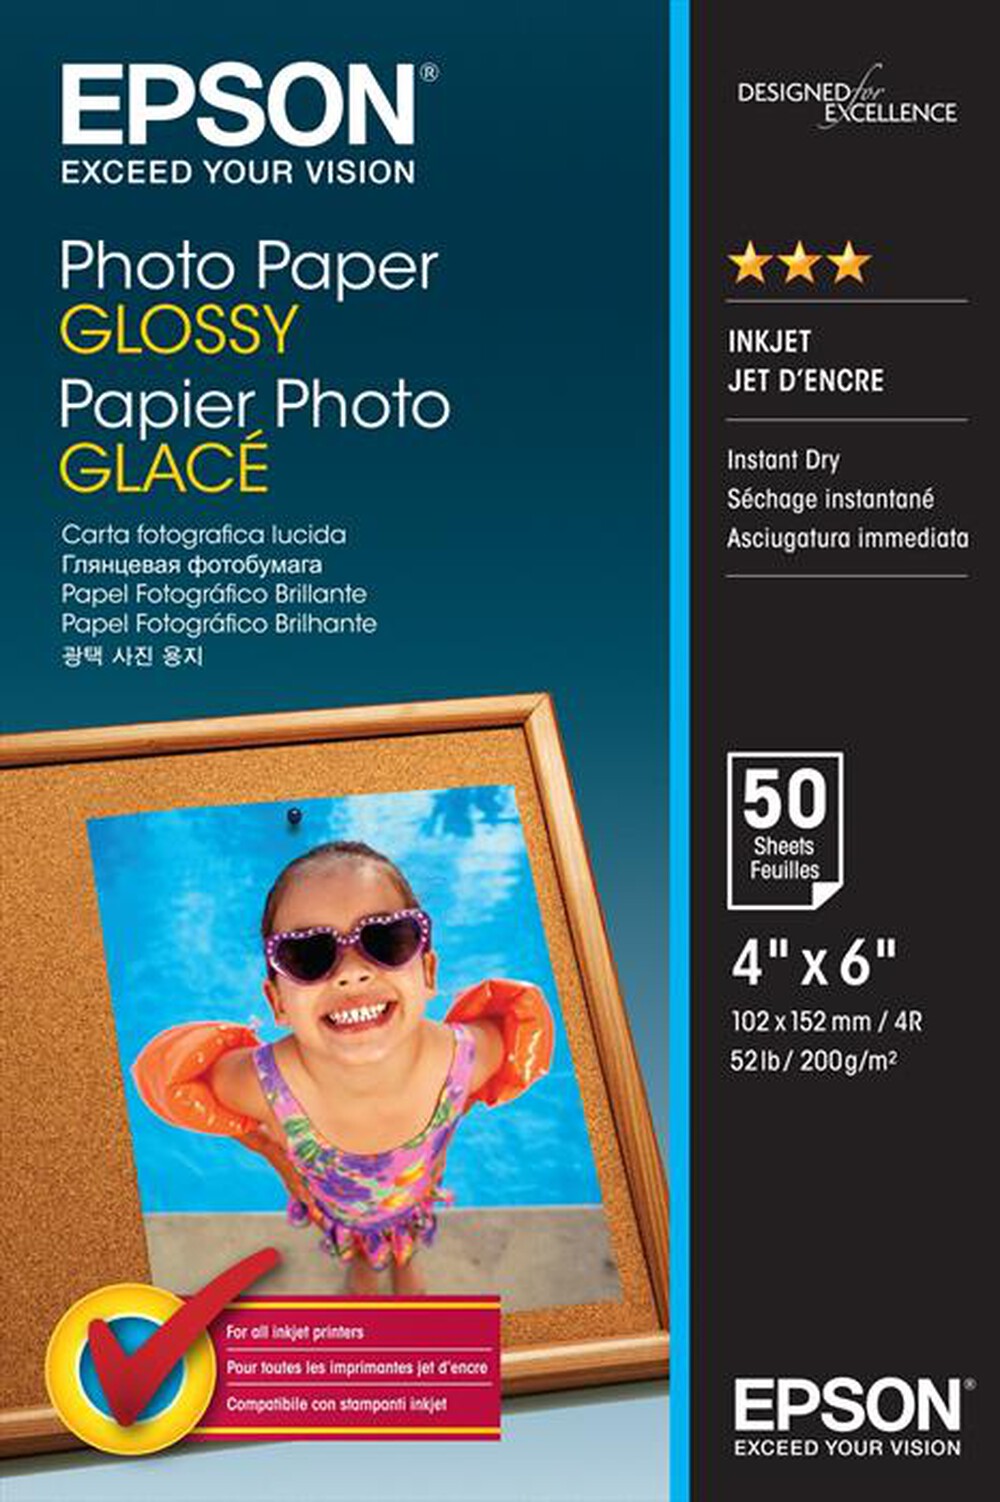 "EPSON - PHOTO PAPER GLOSSY 10X15CM 50 SHEET"